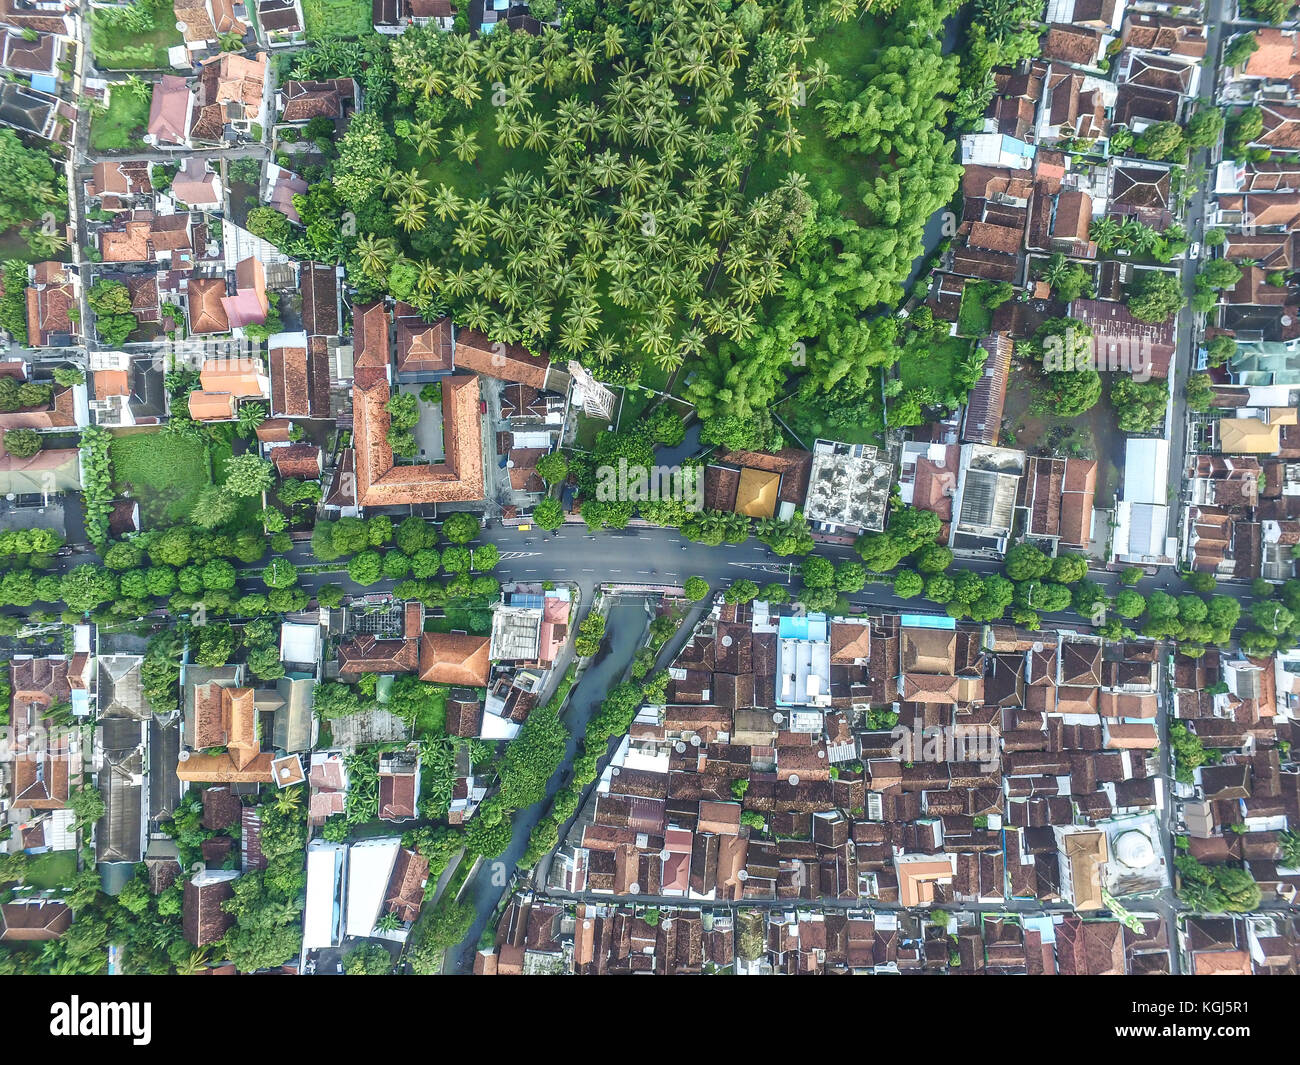 The City of Banyuwangi in East Java - Indonesia Stock Photo